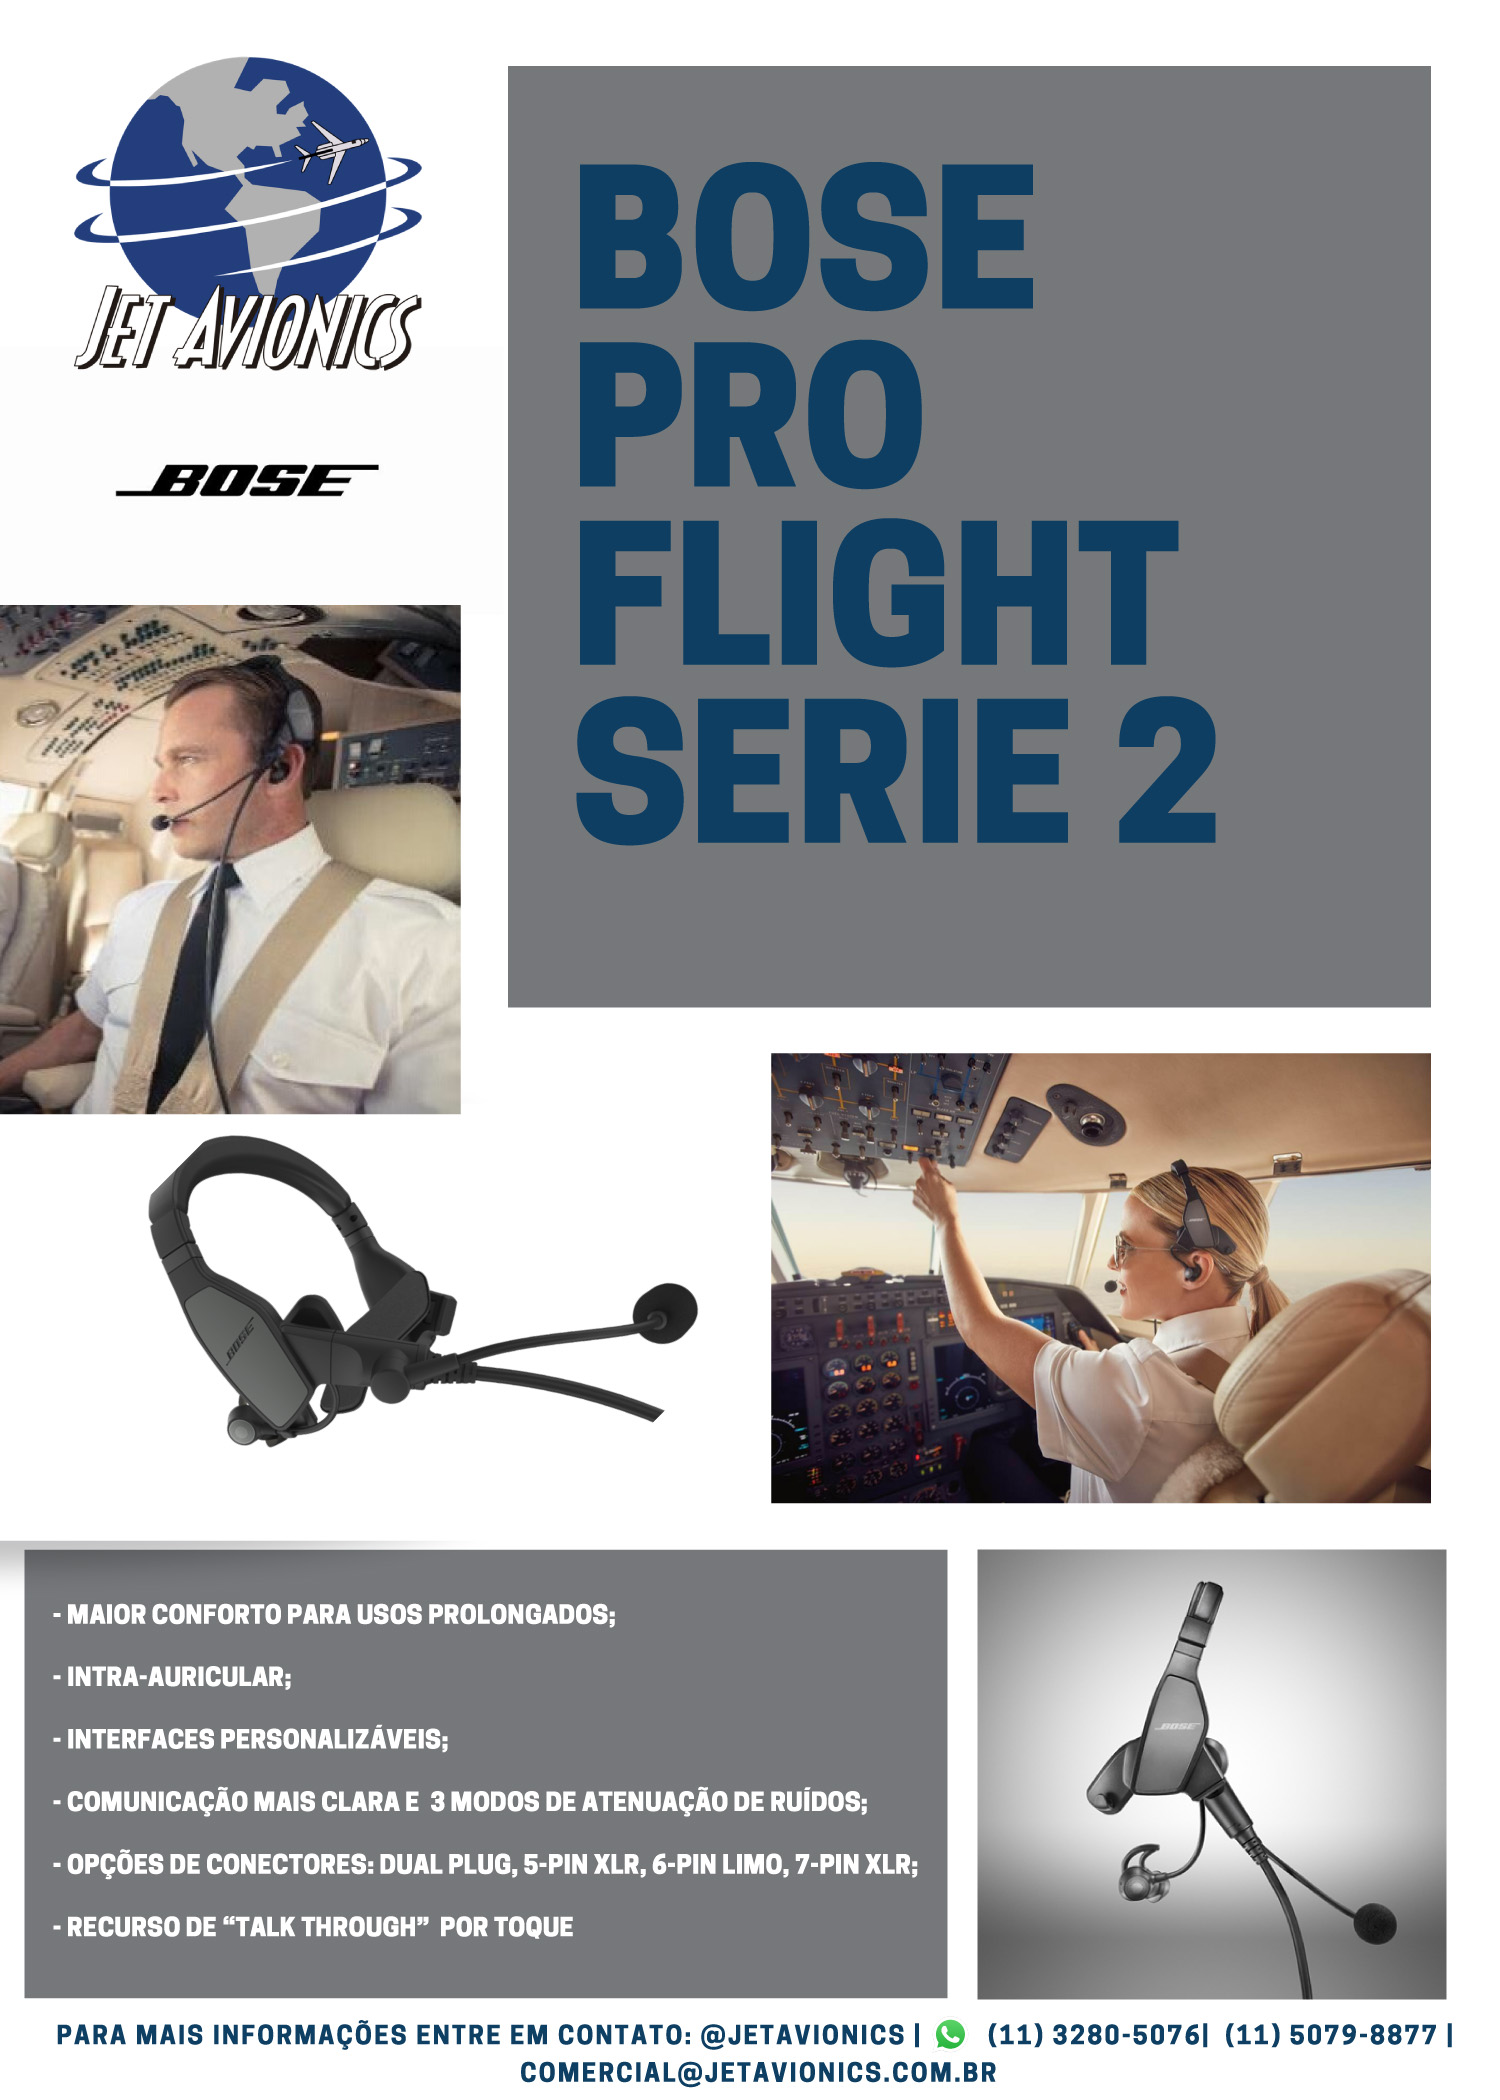 Bose Pro Flight Series 2